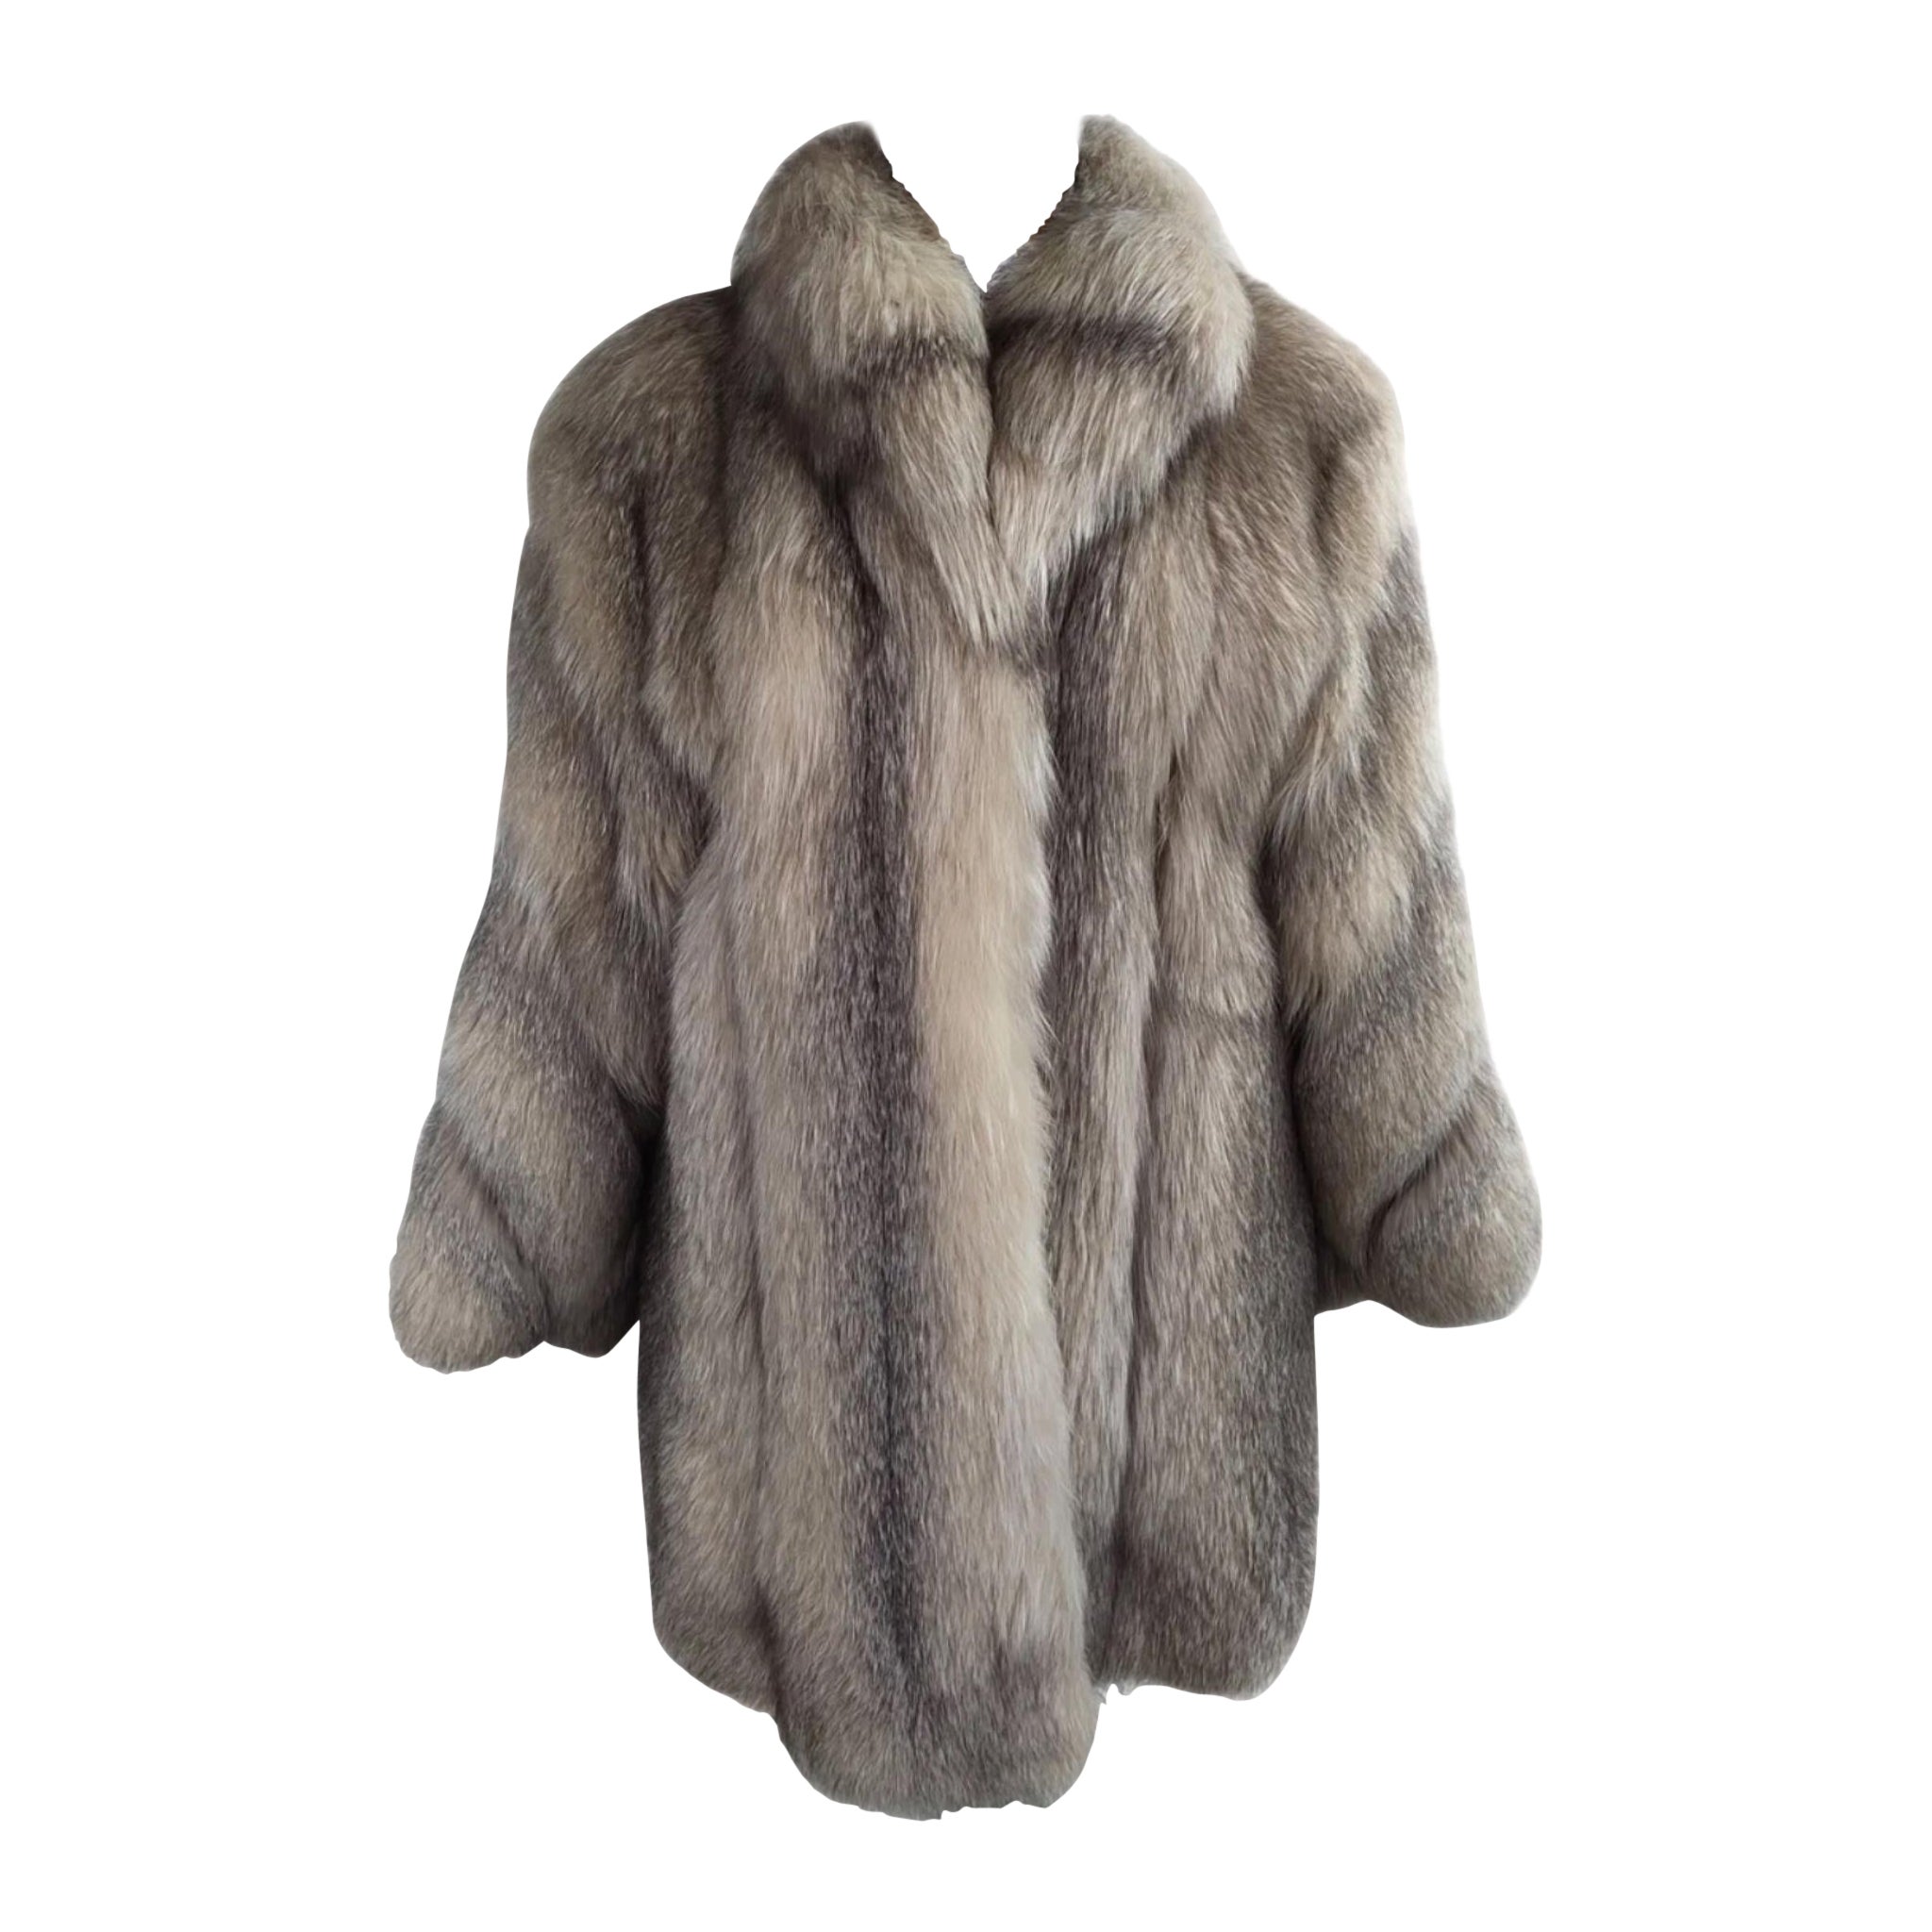 Brand new lightweight saga crystal fox fur coat size 12 L